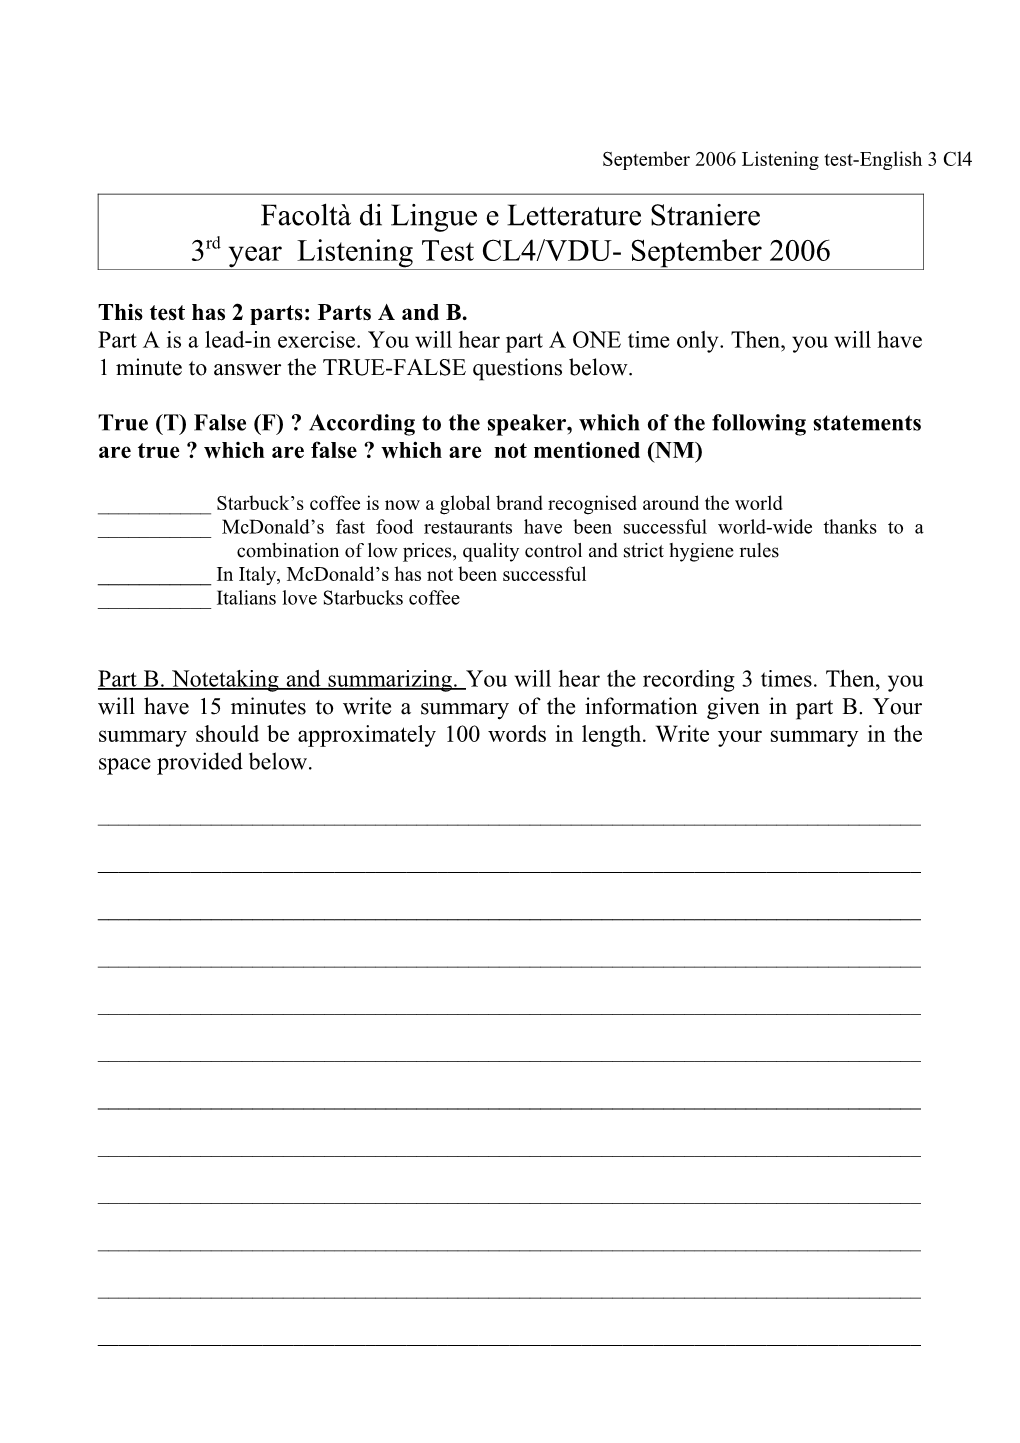 September 2006 Listening Test-English 3 Cl4